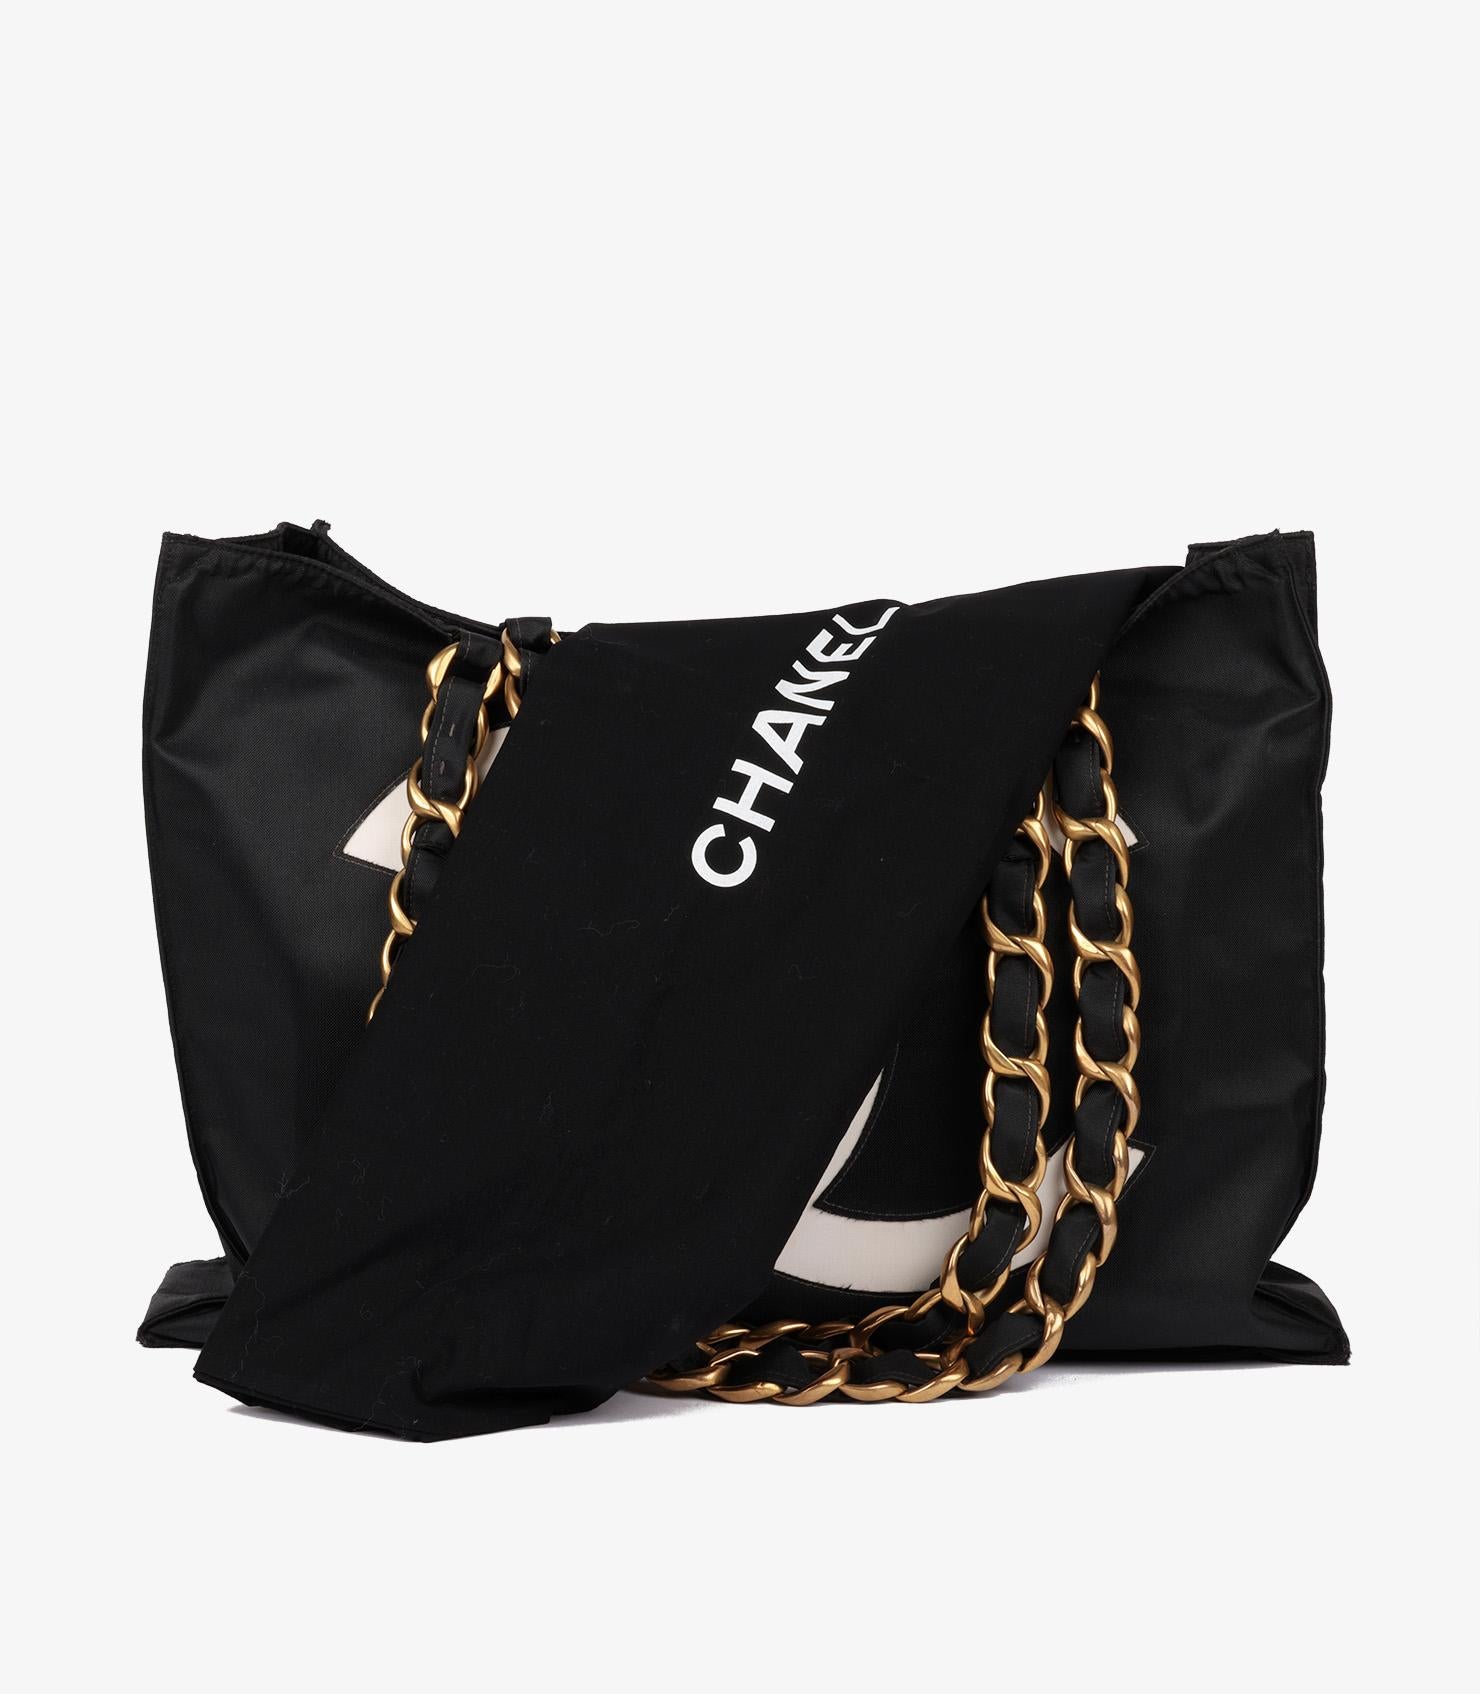 Chanel Black & White Nylon Vintage Large Timeless Shoulder Tote 5